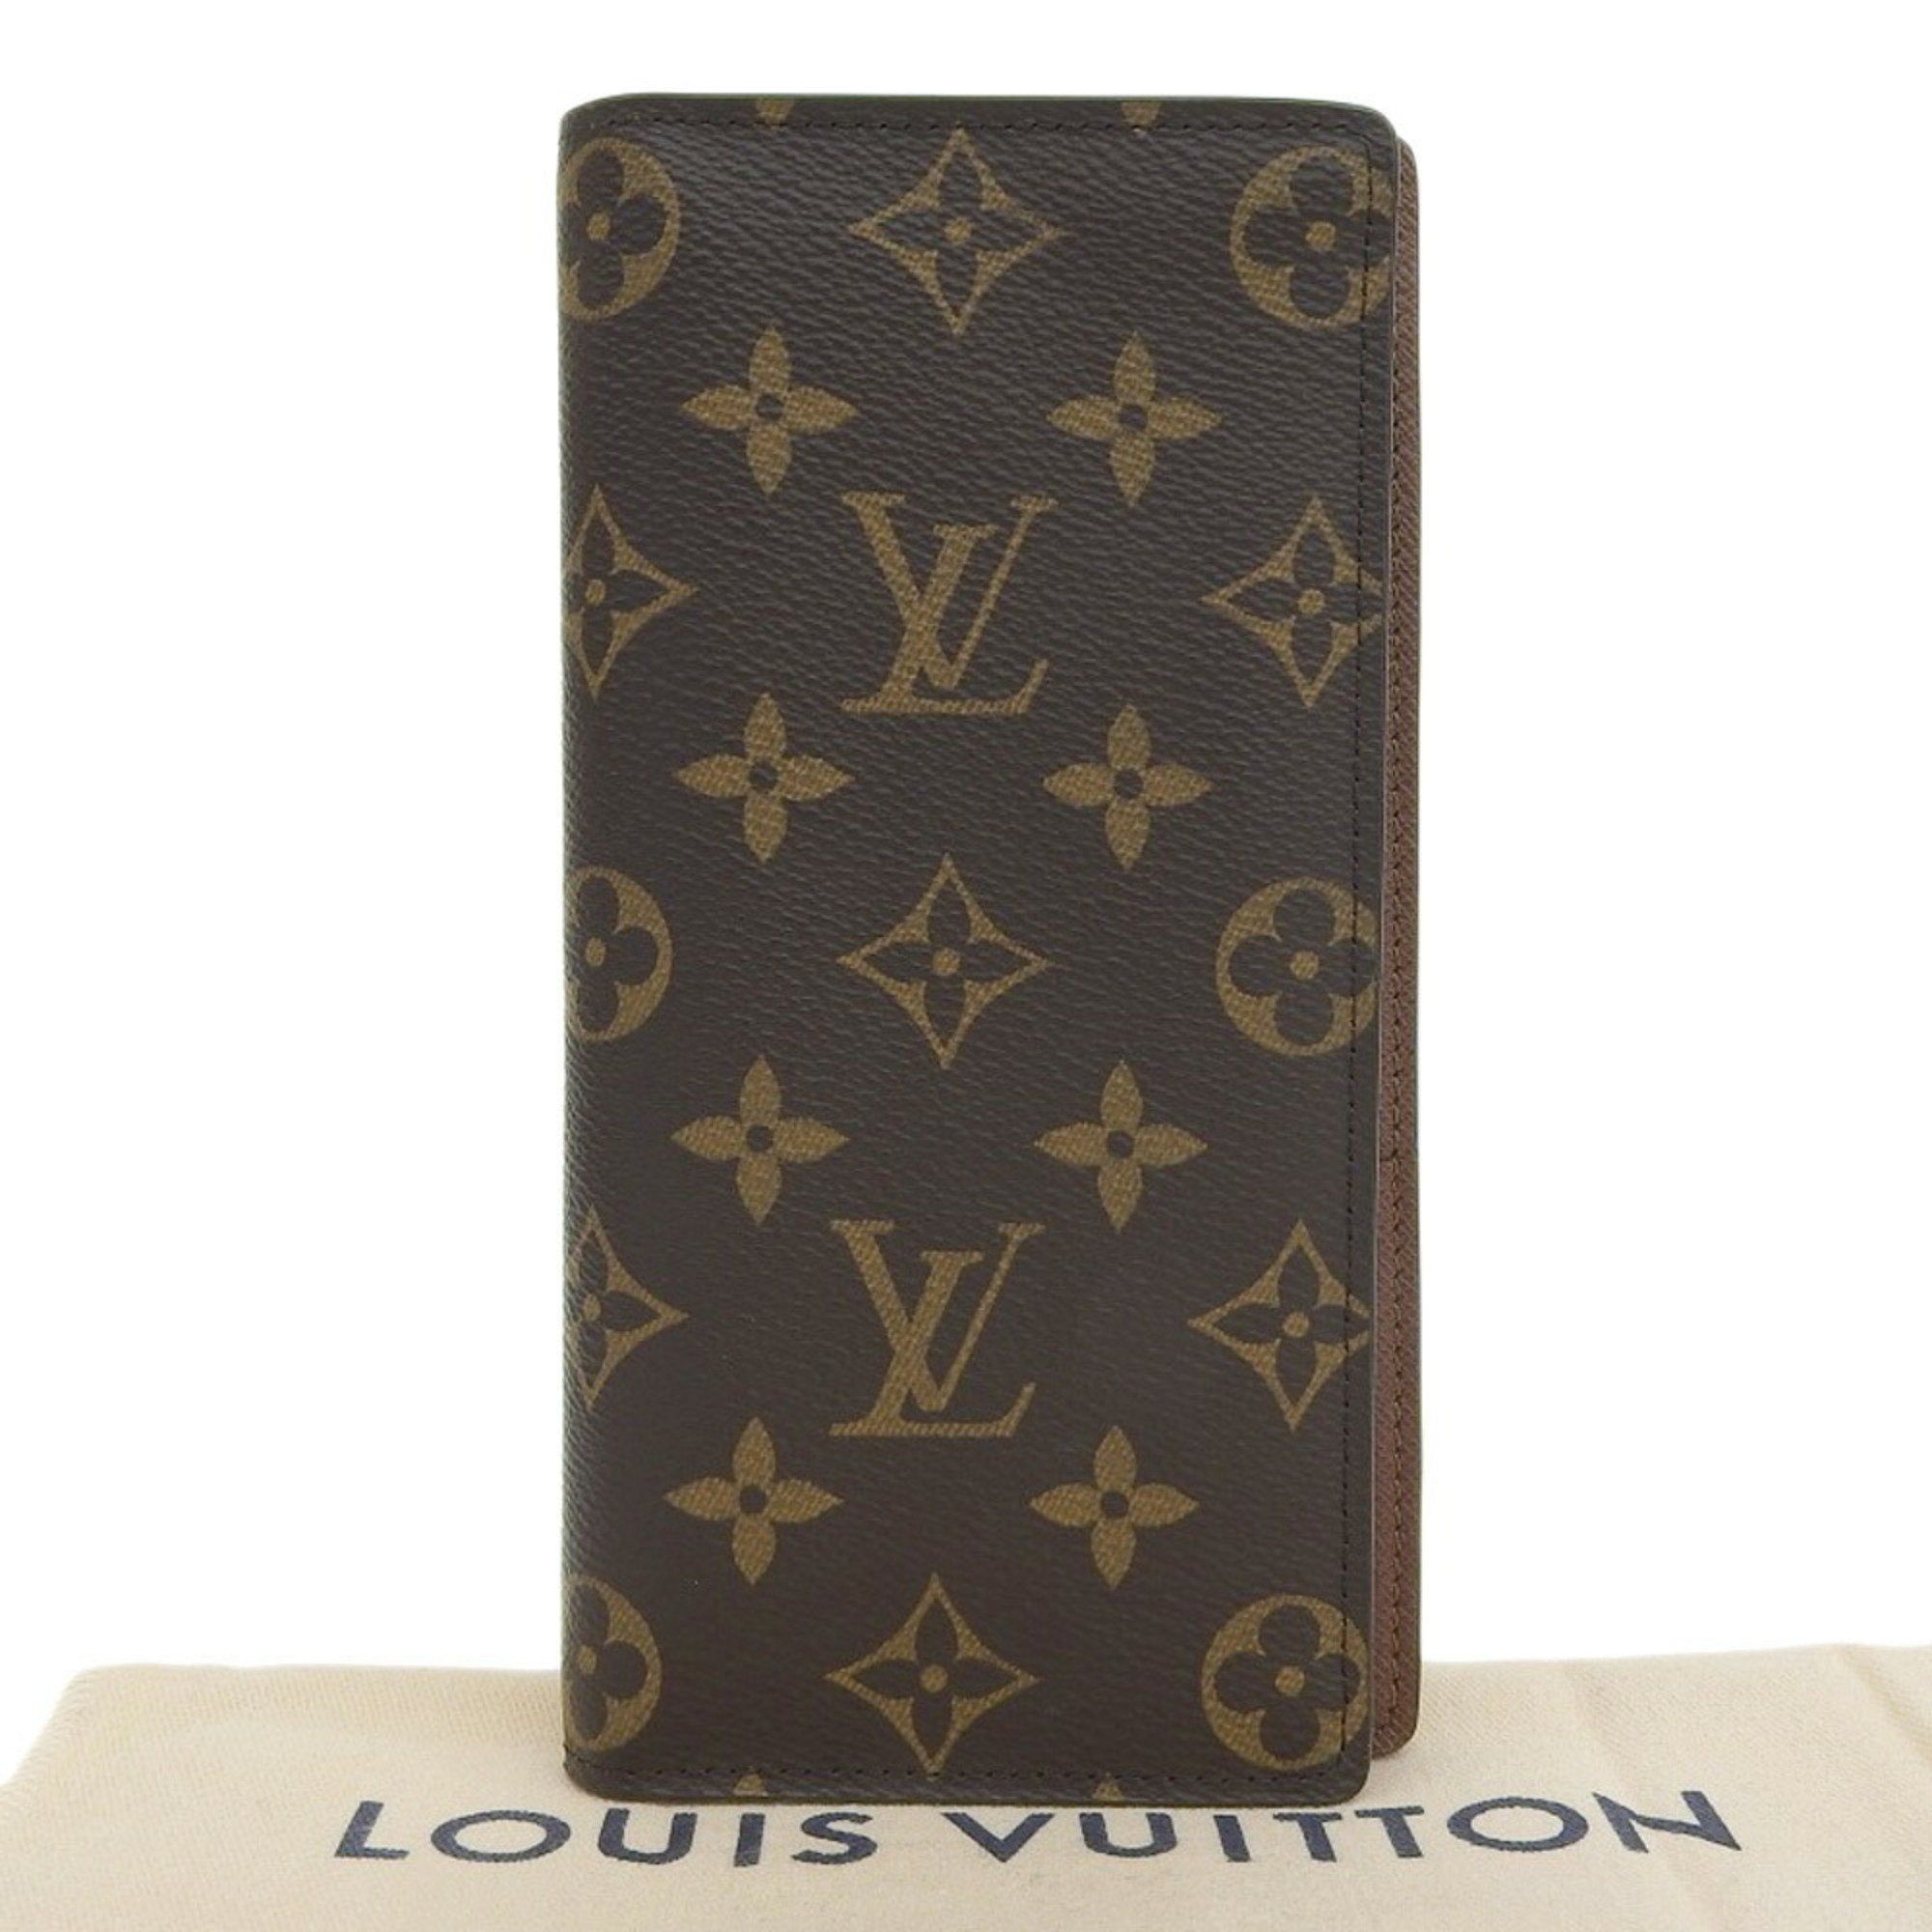 LOUIS VUITTON LOUIS VUITTON Portefeuille clea wallet M80817 Mahina leather  Beige Galet Used LV M80817